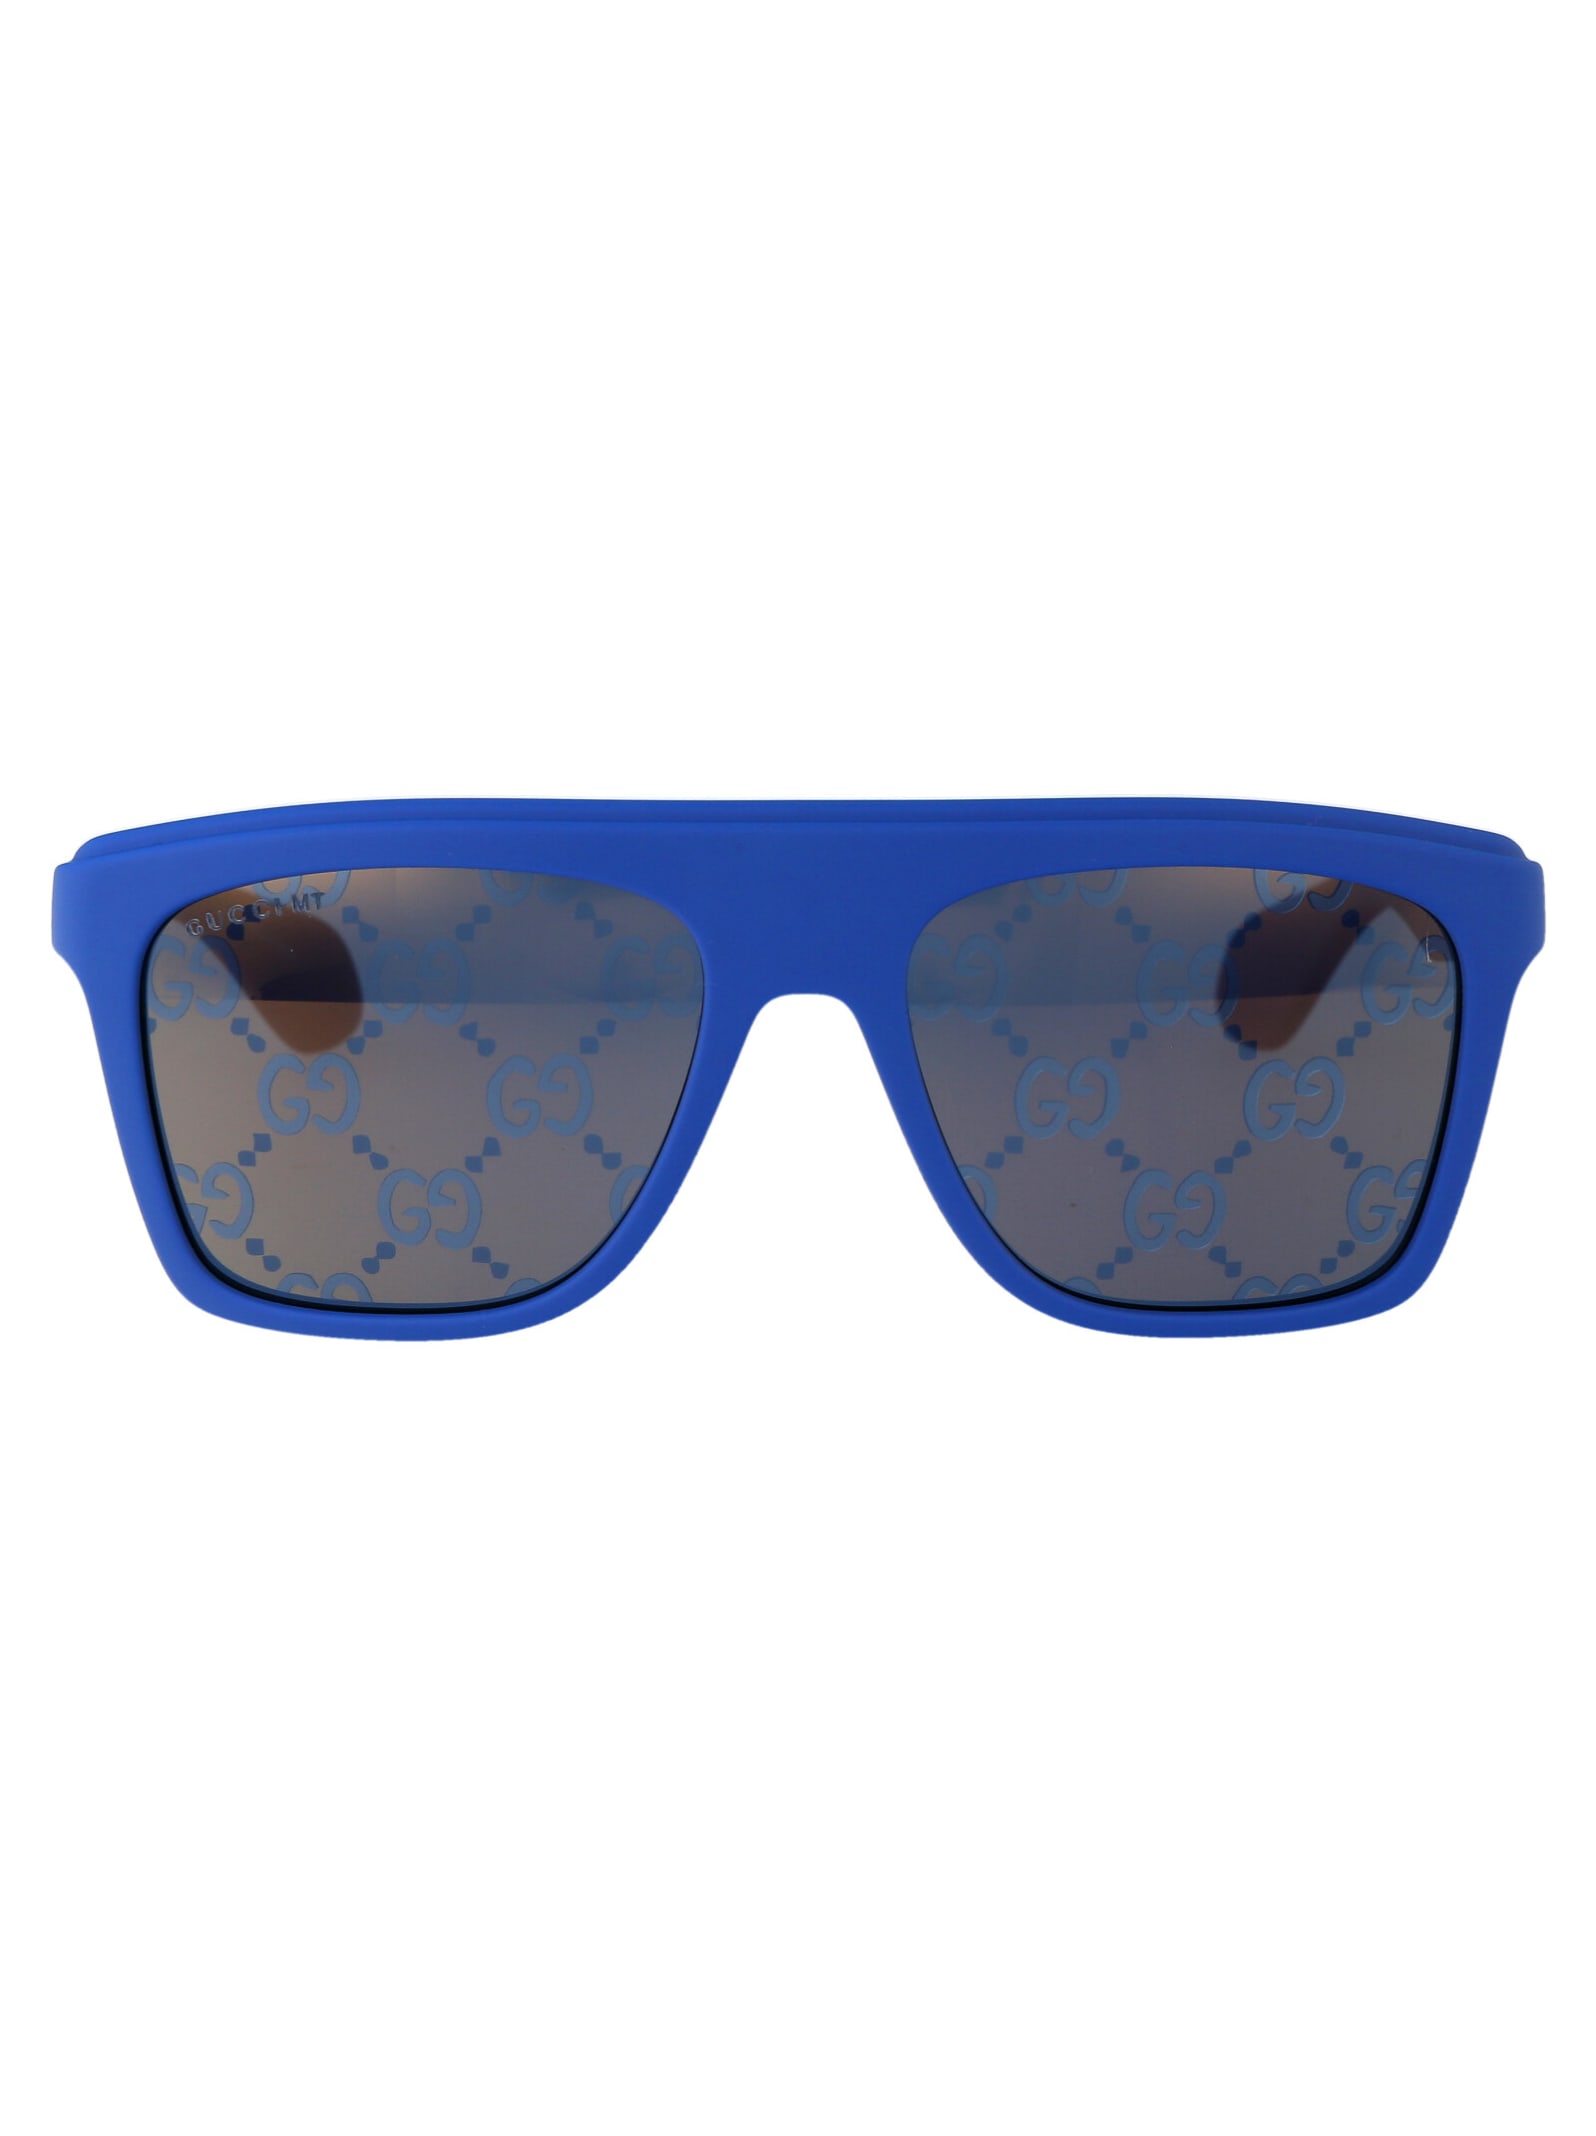 Gg1570s Sunglasses